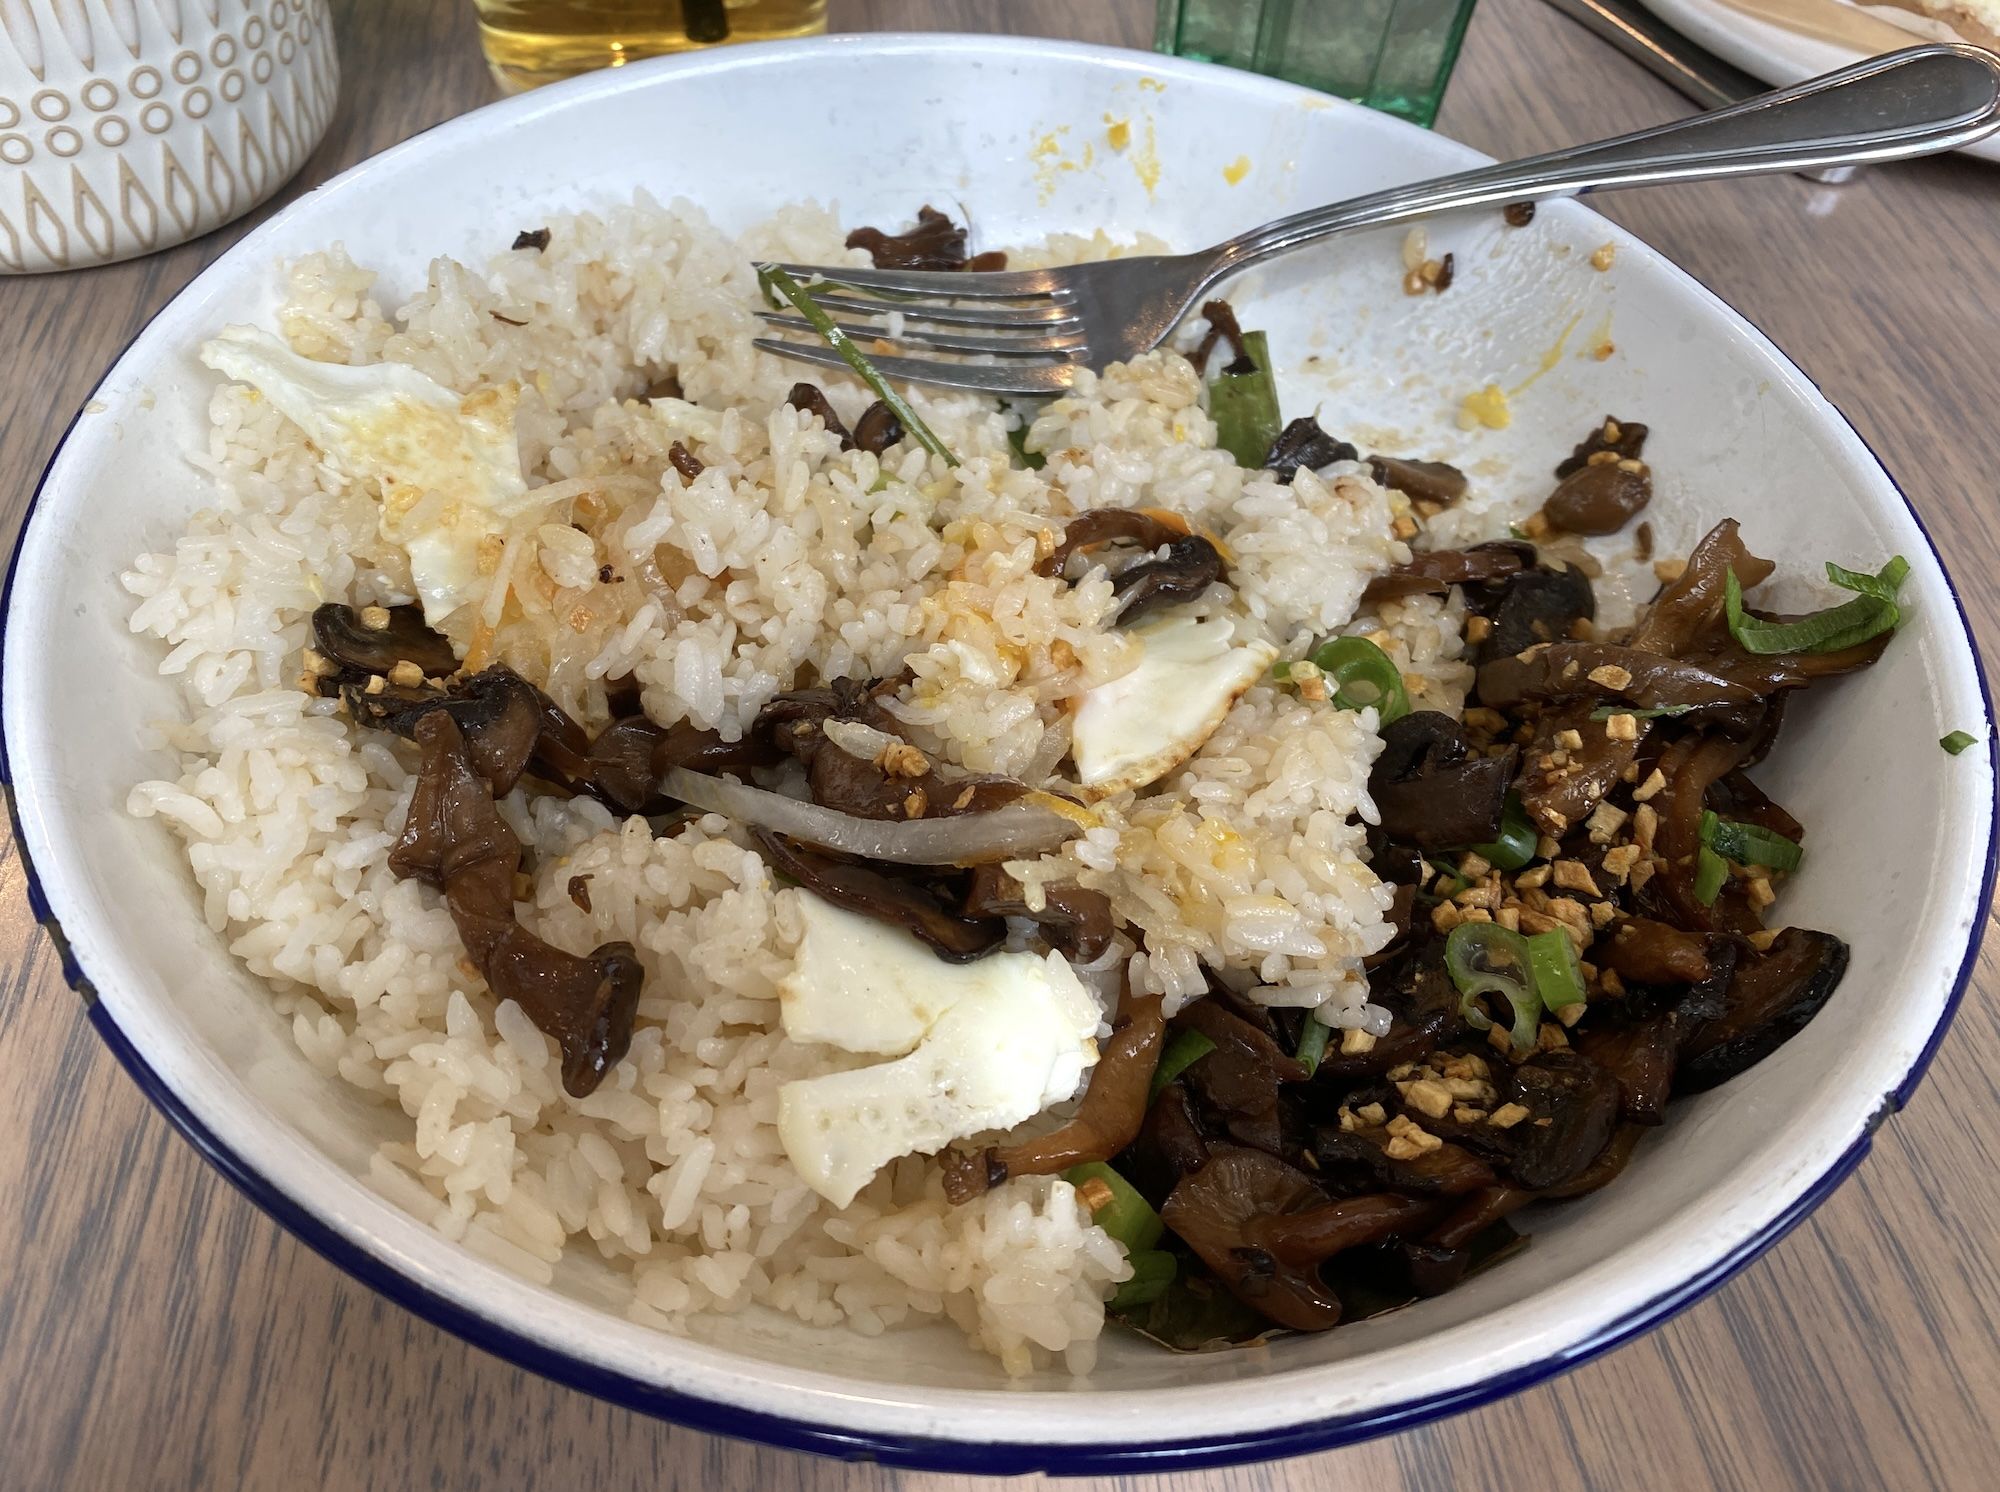 Bowl of rice and mushrooms.